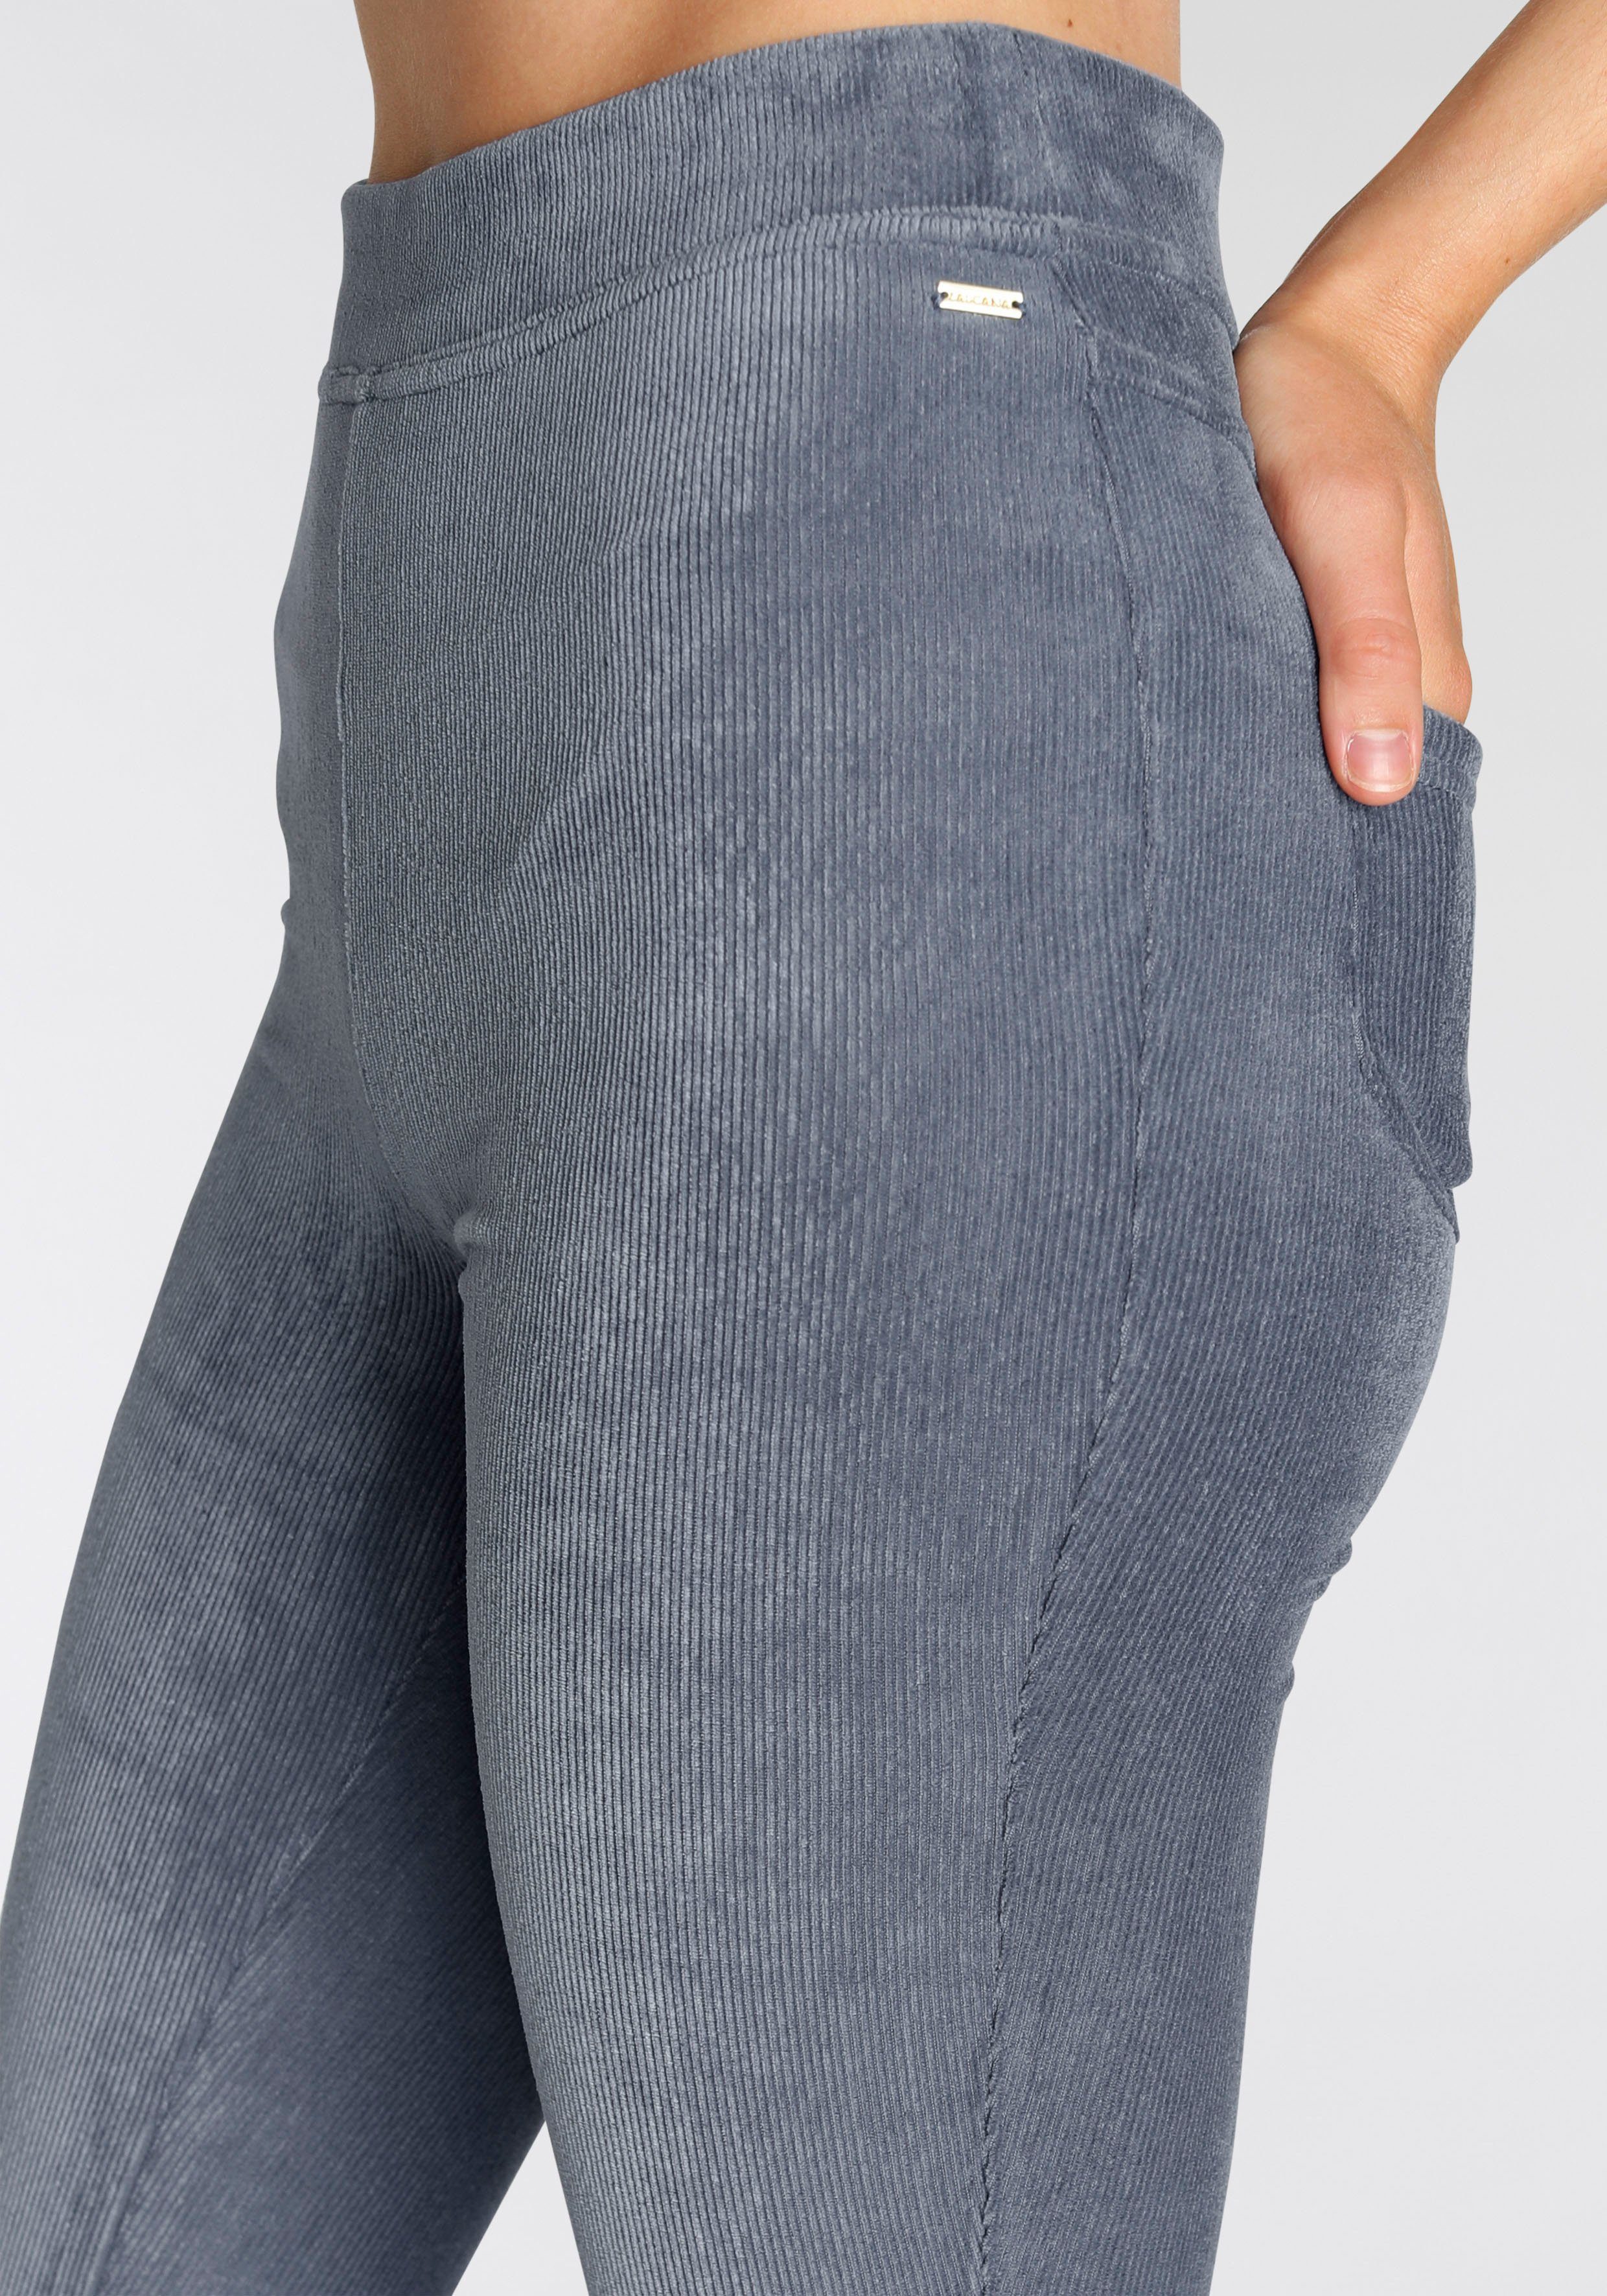 Jazzpants Material graublau Loungewear aus Cord-Optik, in LASCANA weichem